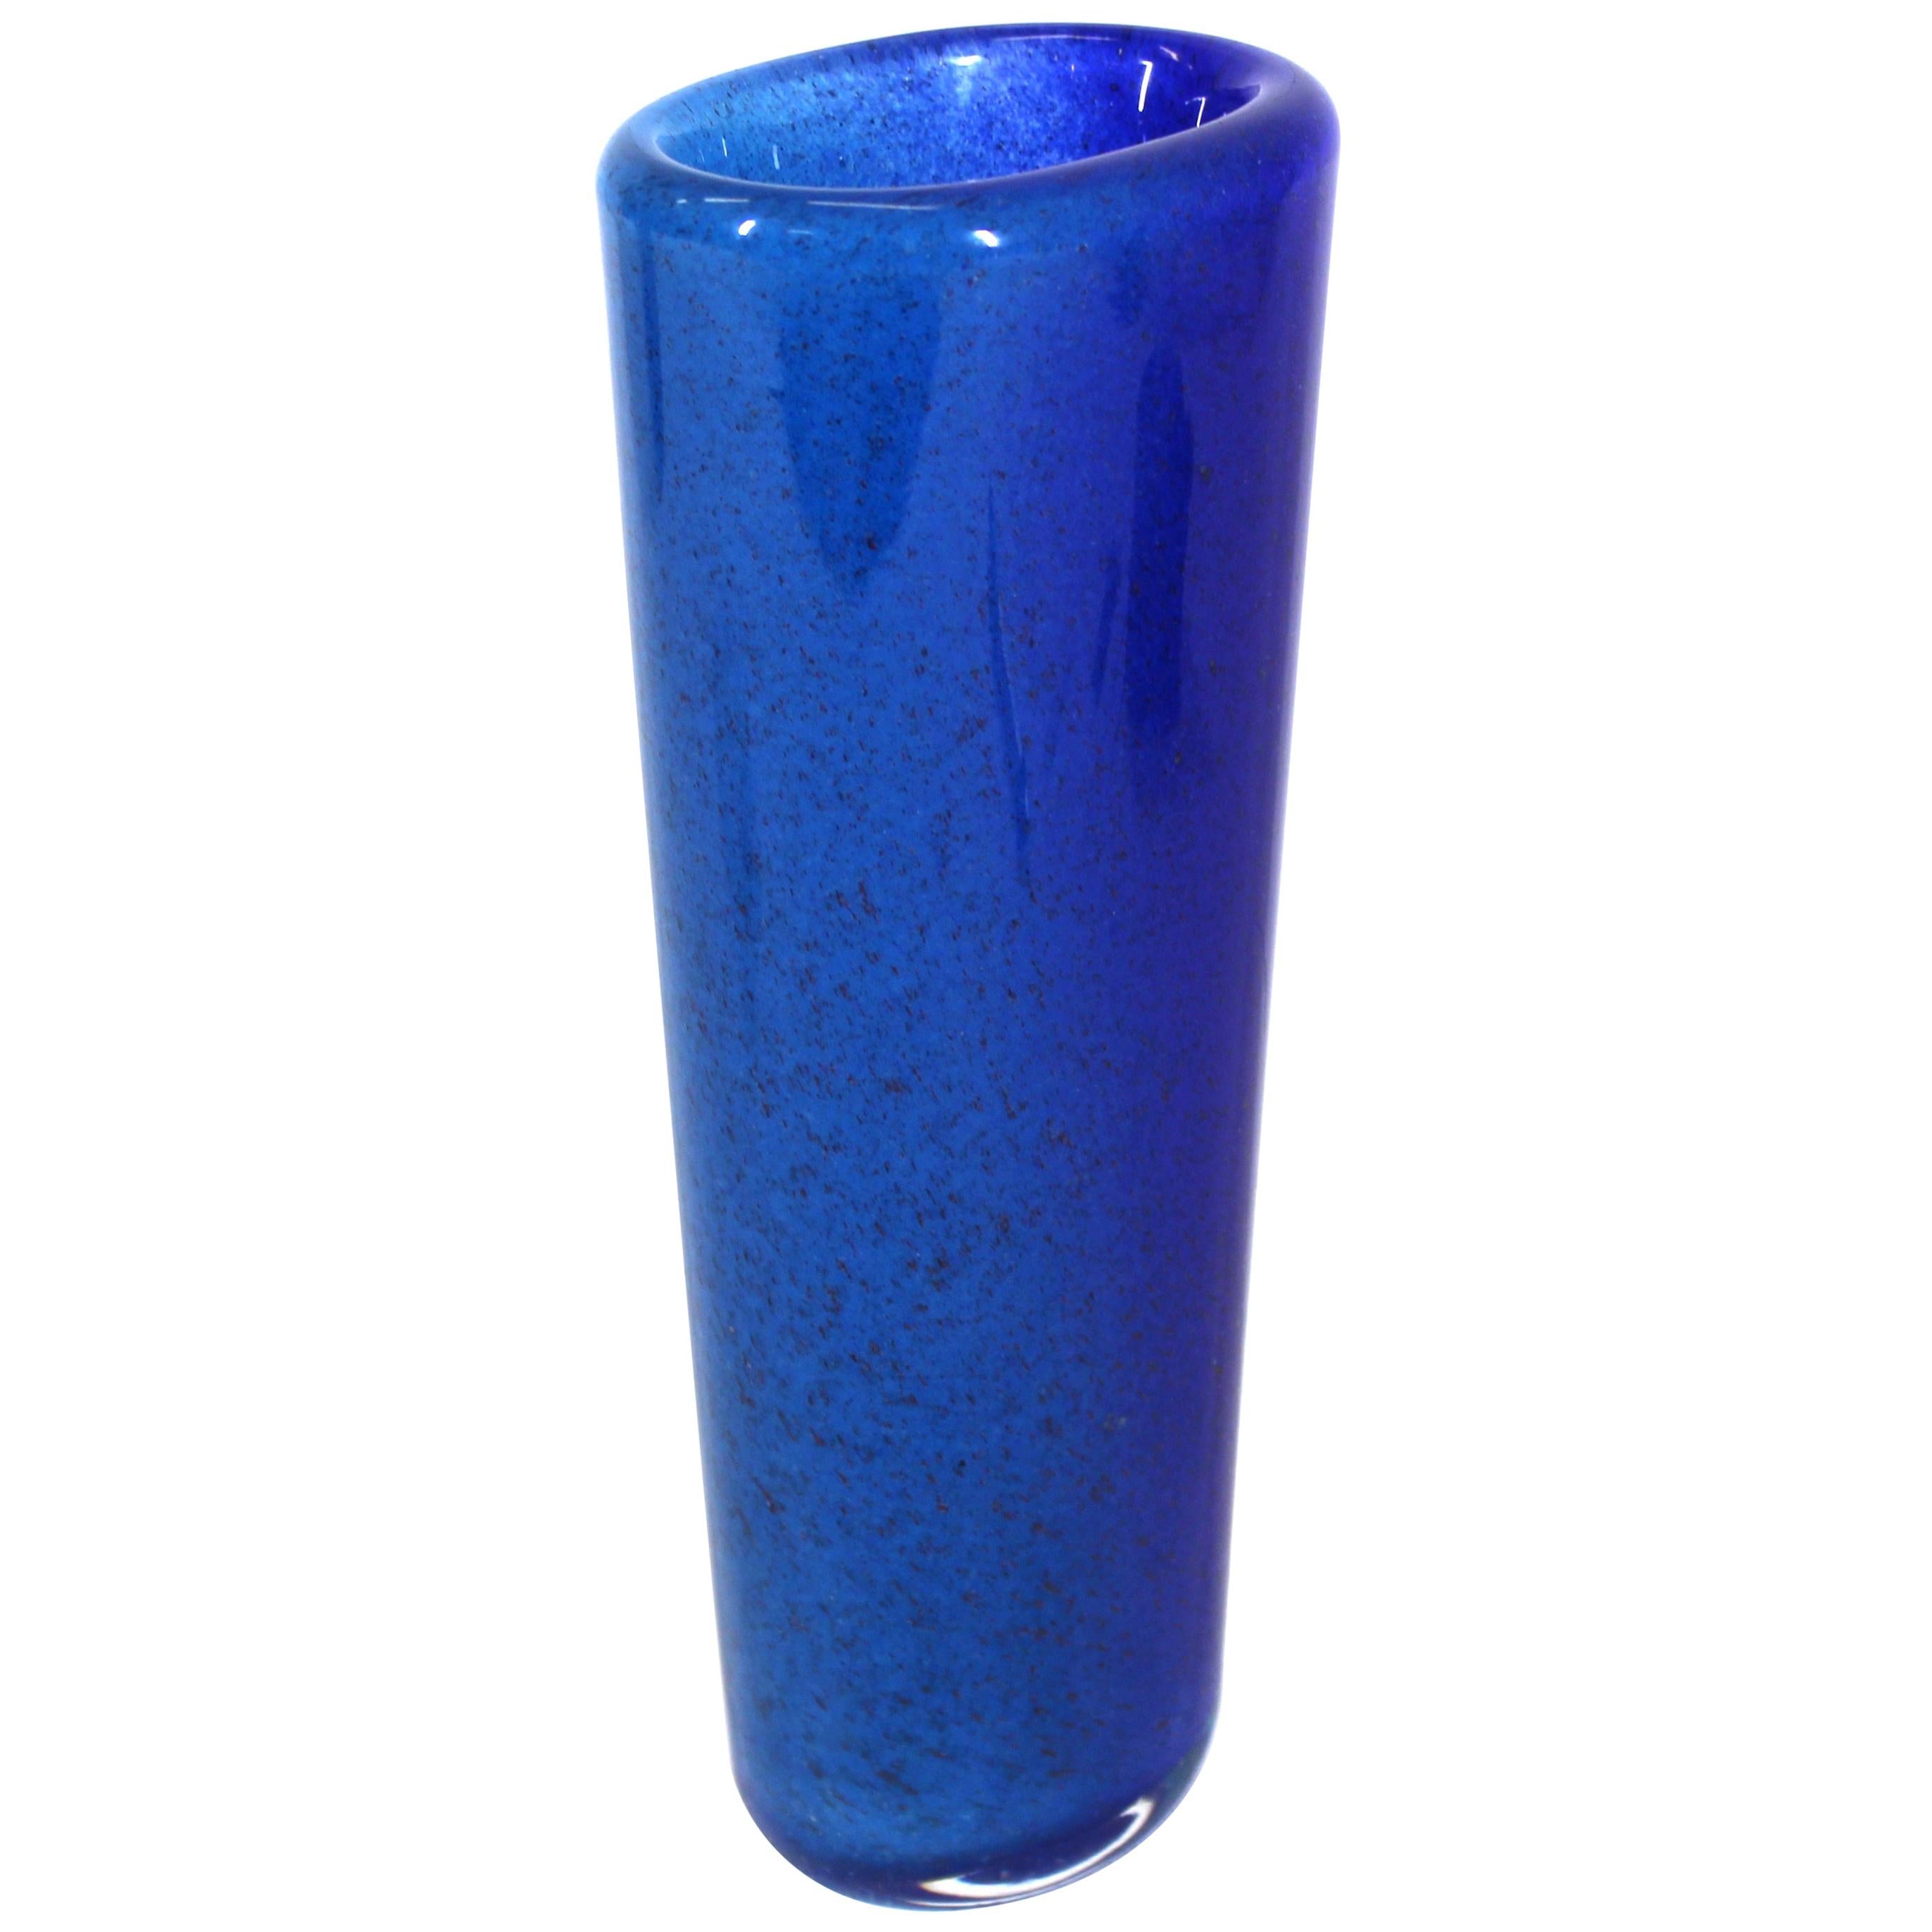 Dino Martens for Toso Italian Mid-Century Modern Murano Glass Vase in Blue